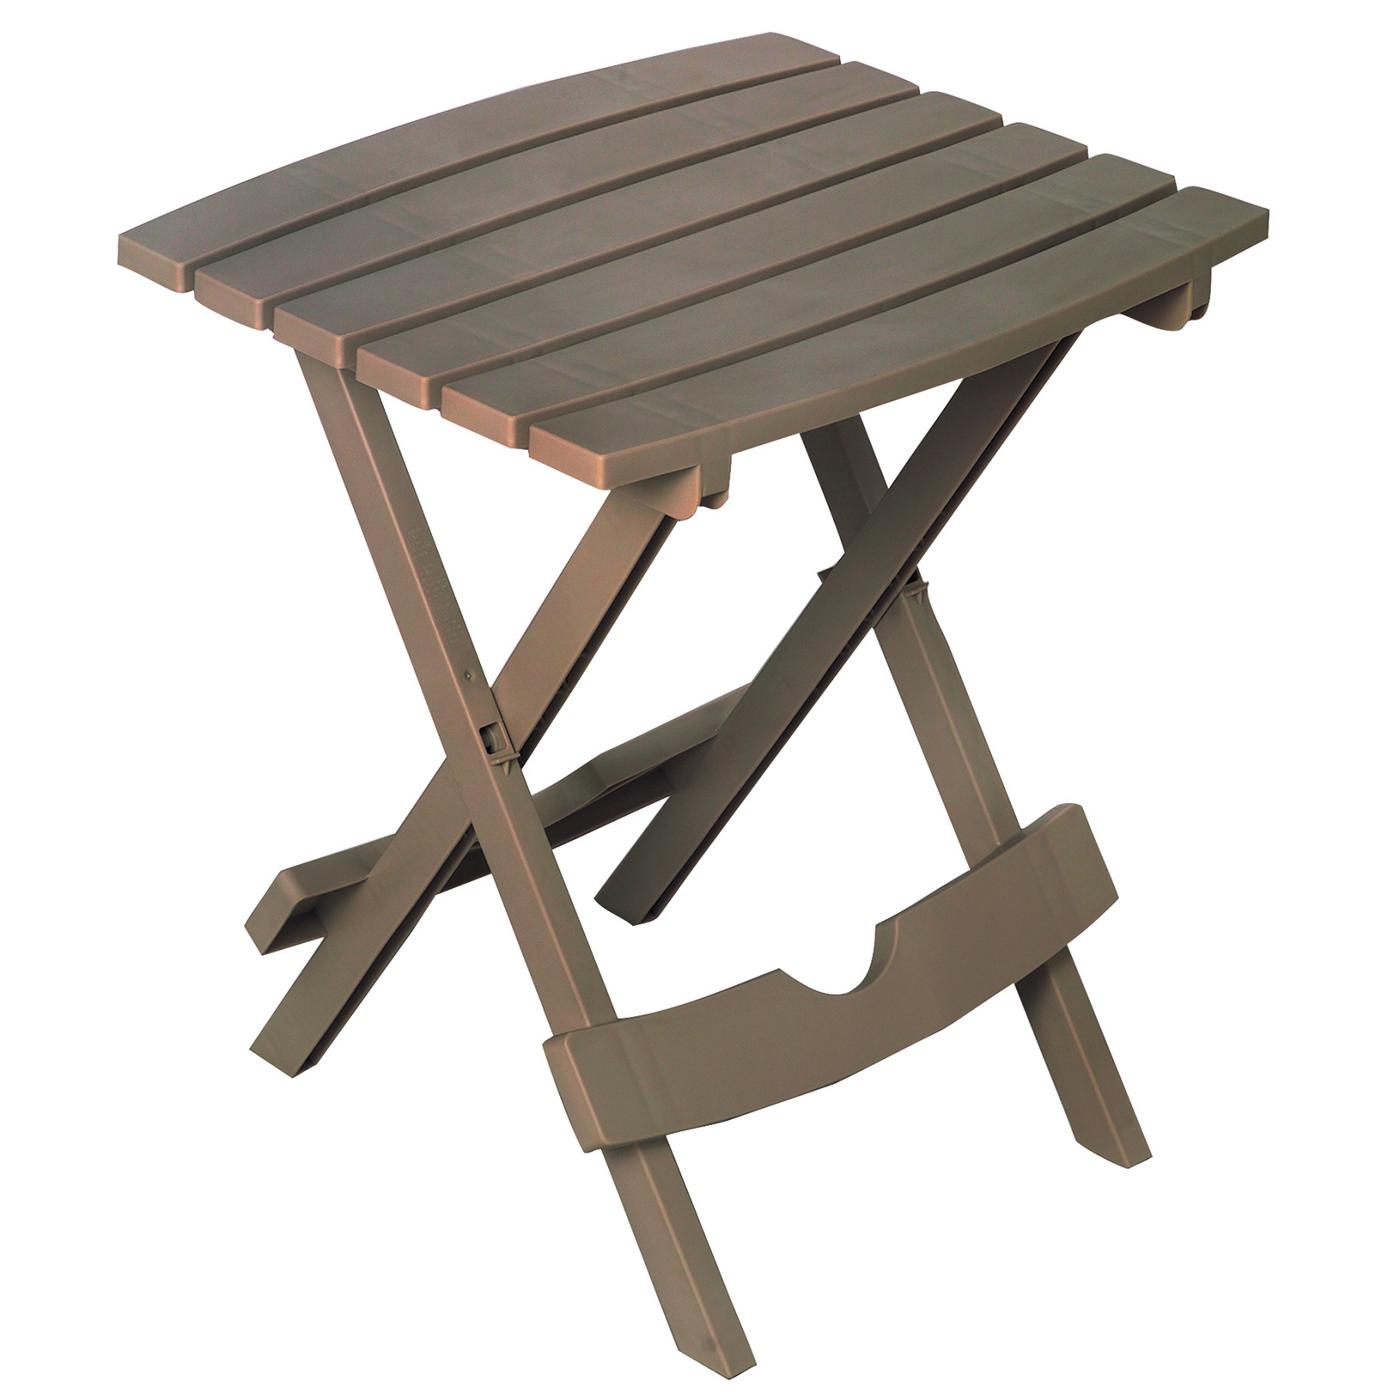 Adams Manufacturing Quick Fold Side Table - Portobello; image 1 of 6